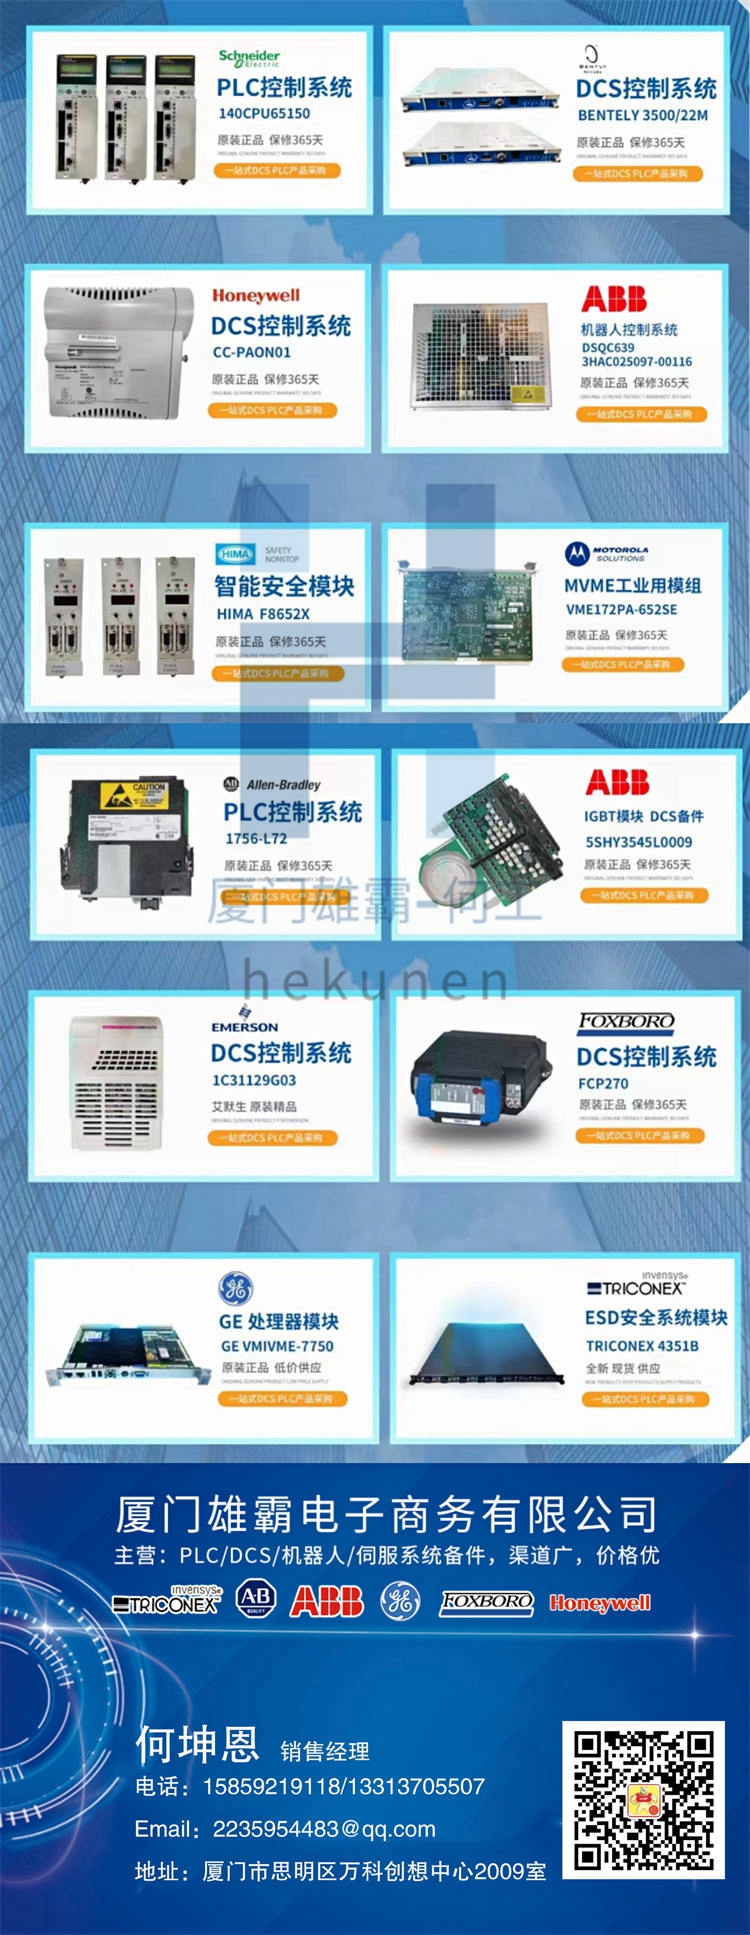 CI856 3BSE026055R1 PLC控制器ABB 输入输出模块-备件销售 